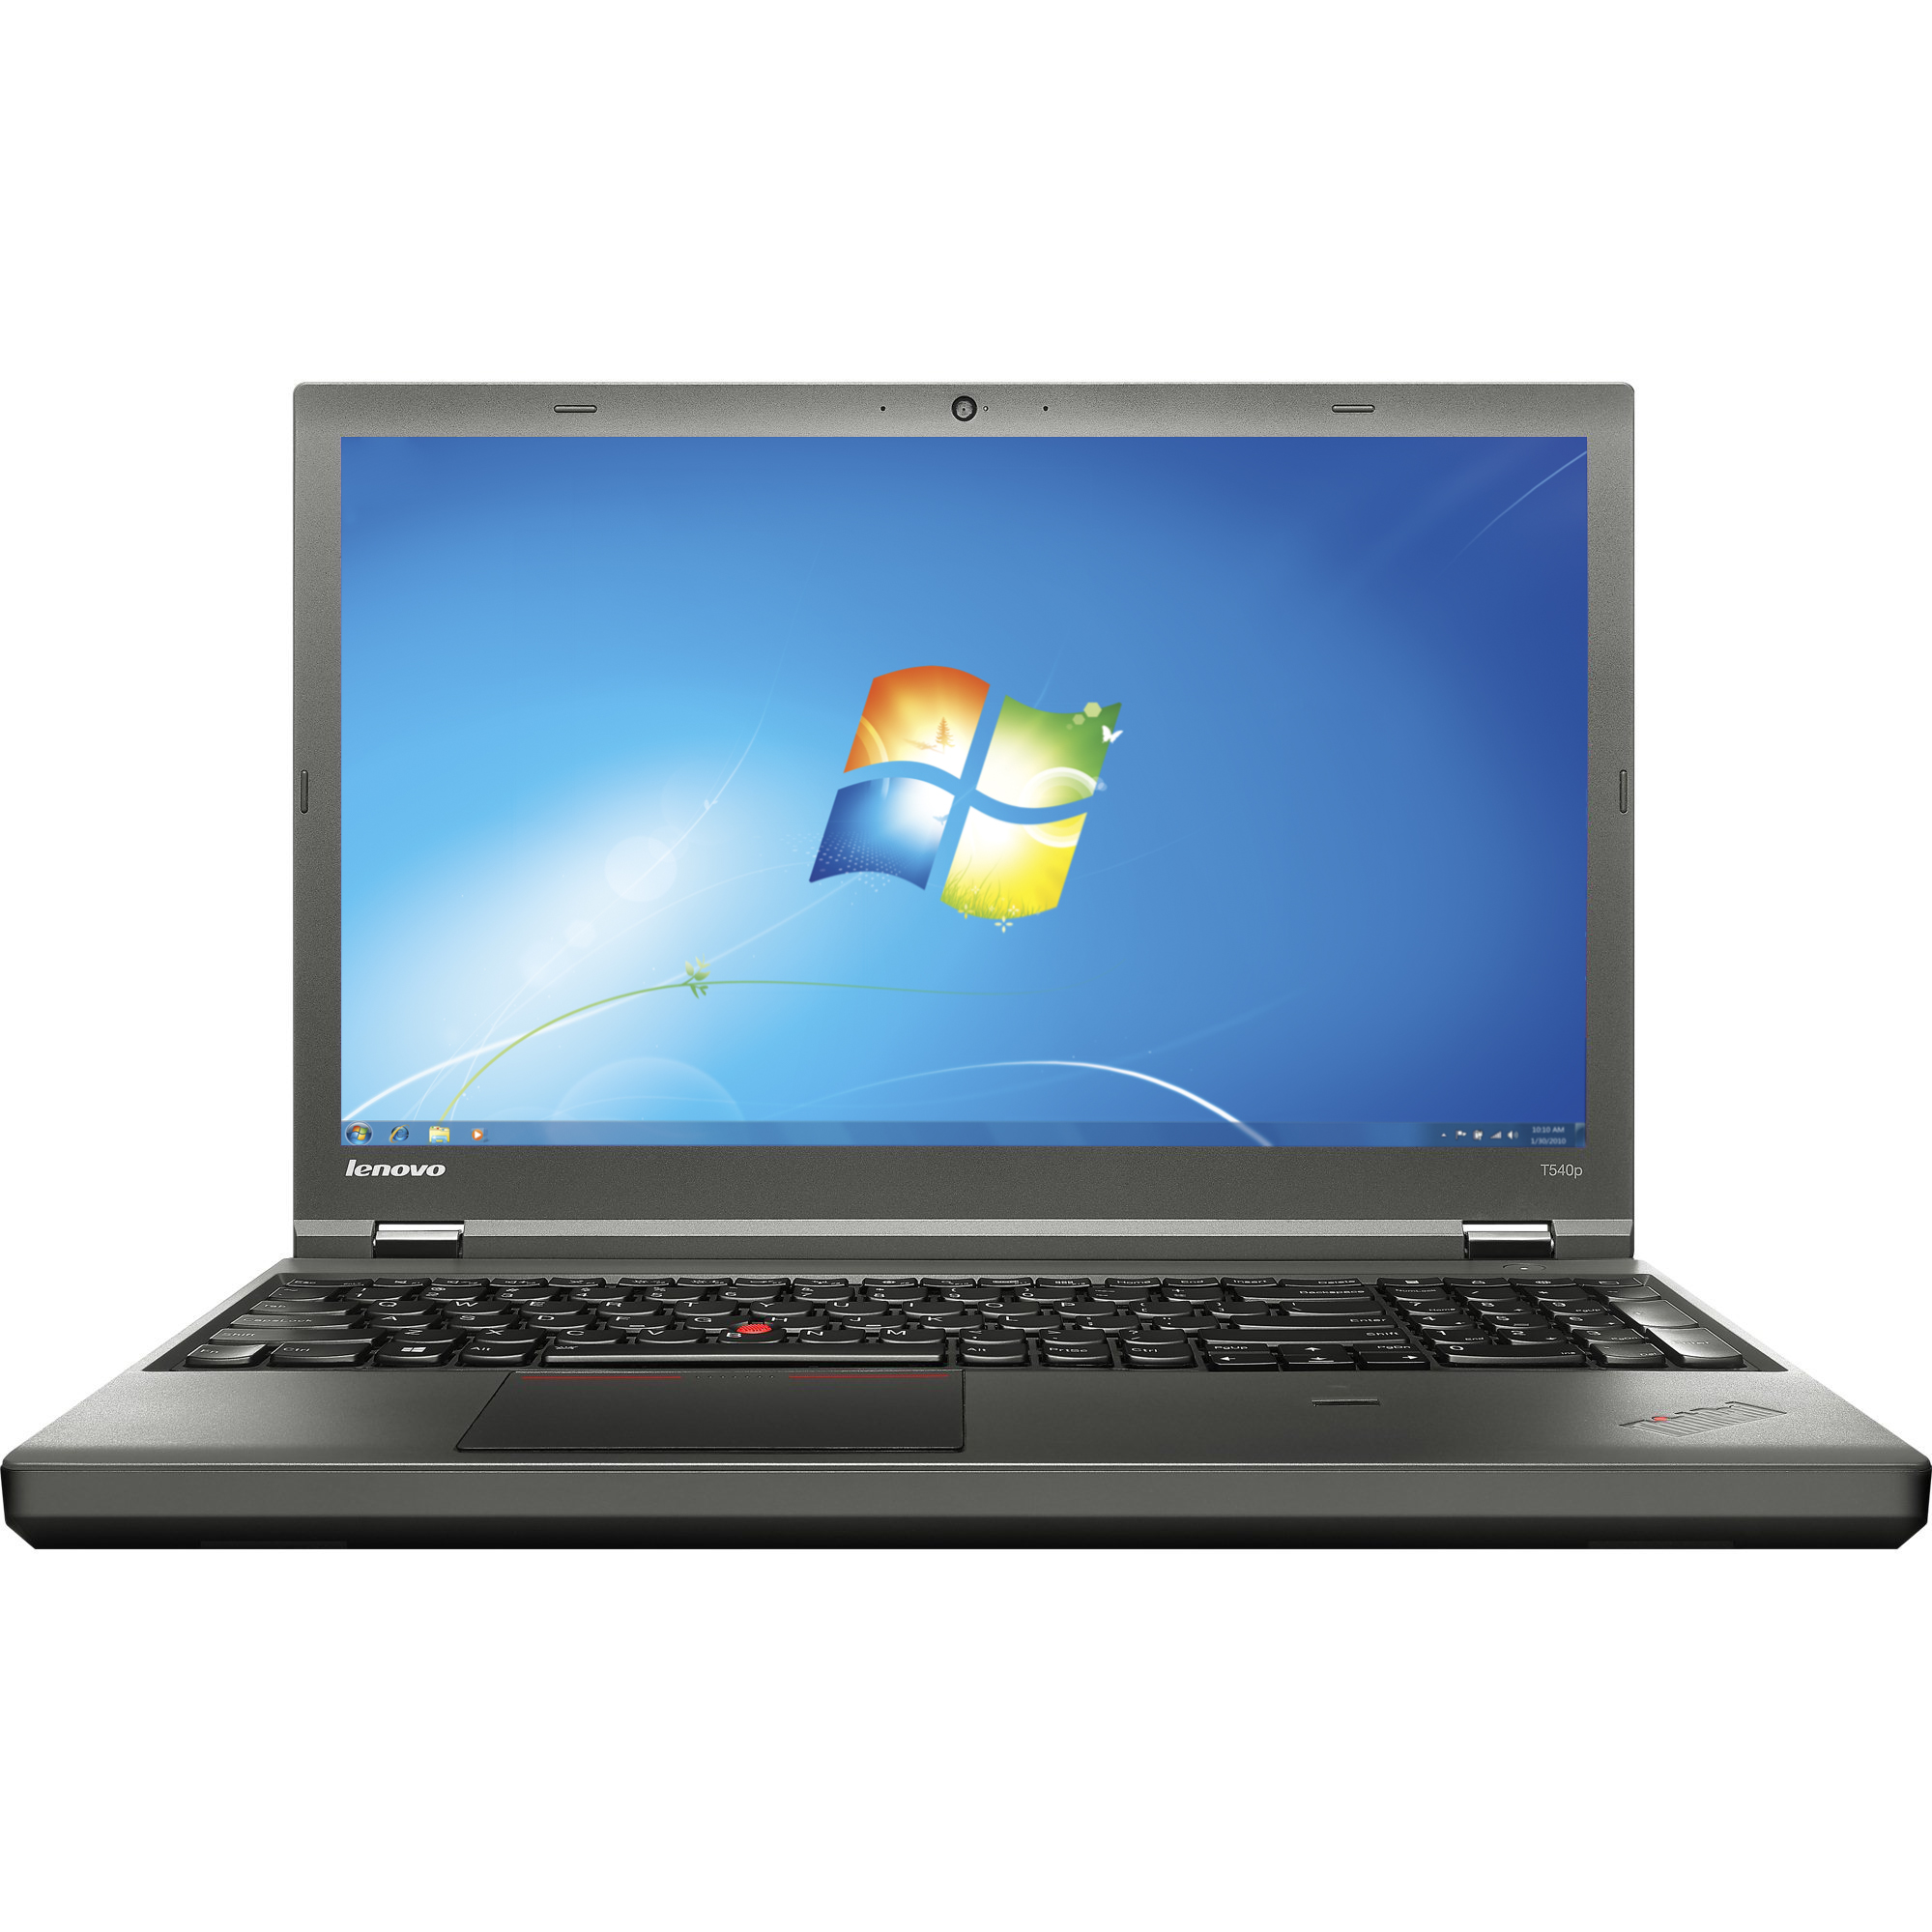 Notebook Lenovo ThinkPad T540p 15.6 HD Intel Core i5-4210M RAM 4GB HDD 500GB Windows 10 Pro Negru title=Notebook Lenovo ThinkPad T540p 15.6 HD Intel Core i5-4210M RAM 4GB HDD 500GB Windows 10 Pro Negru